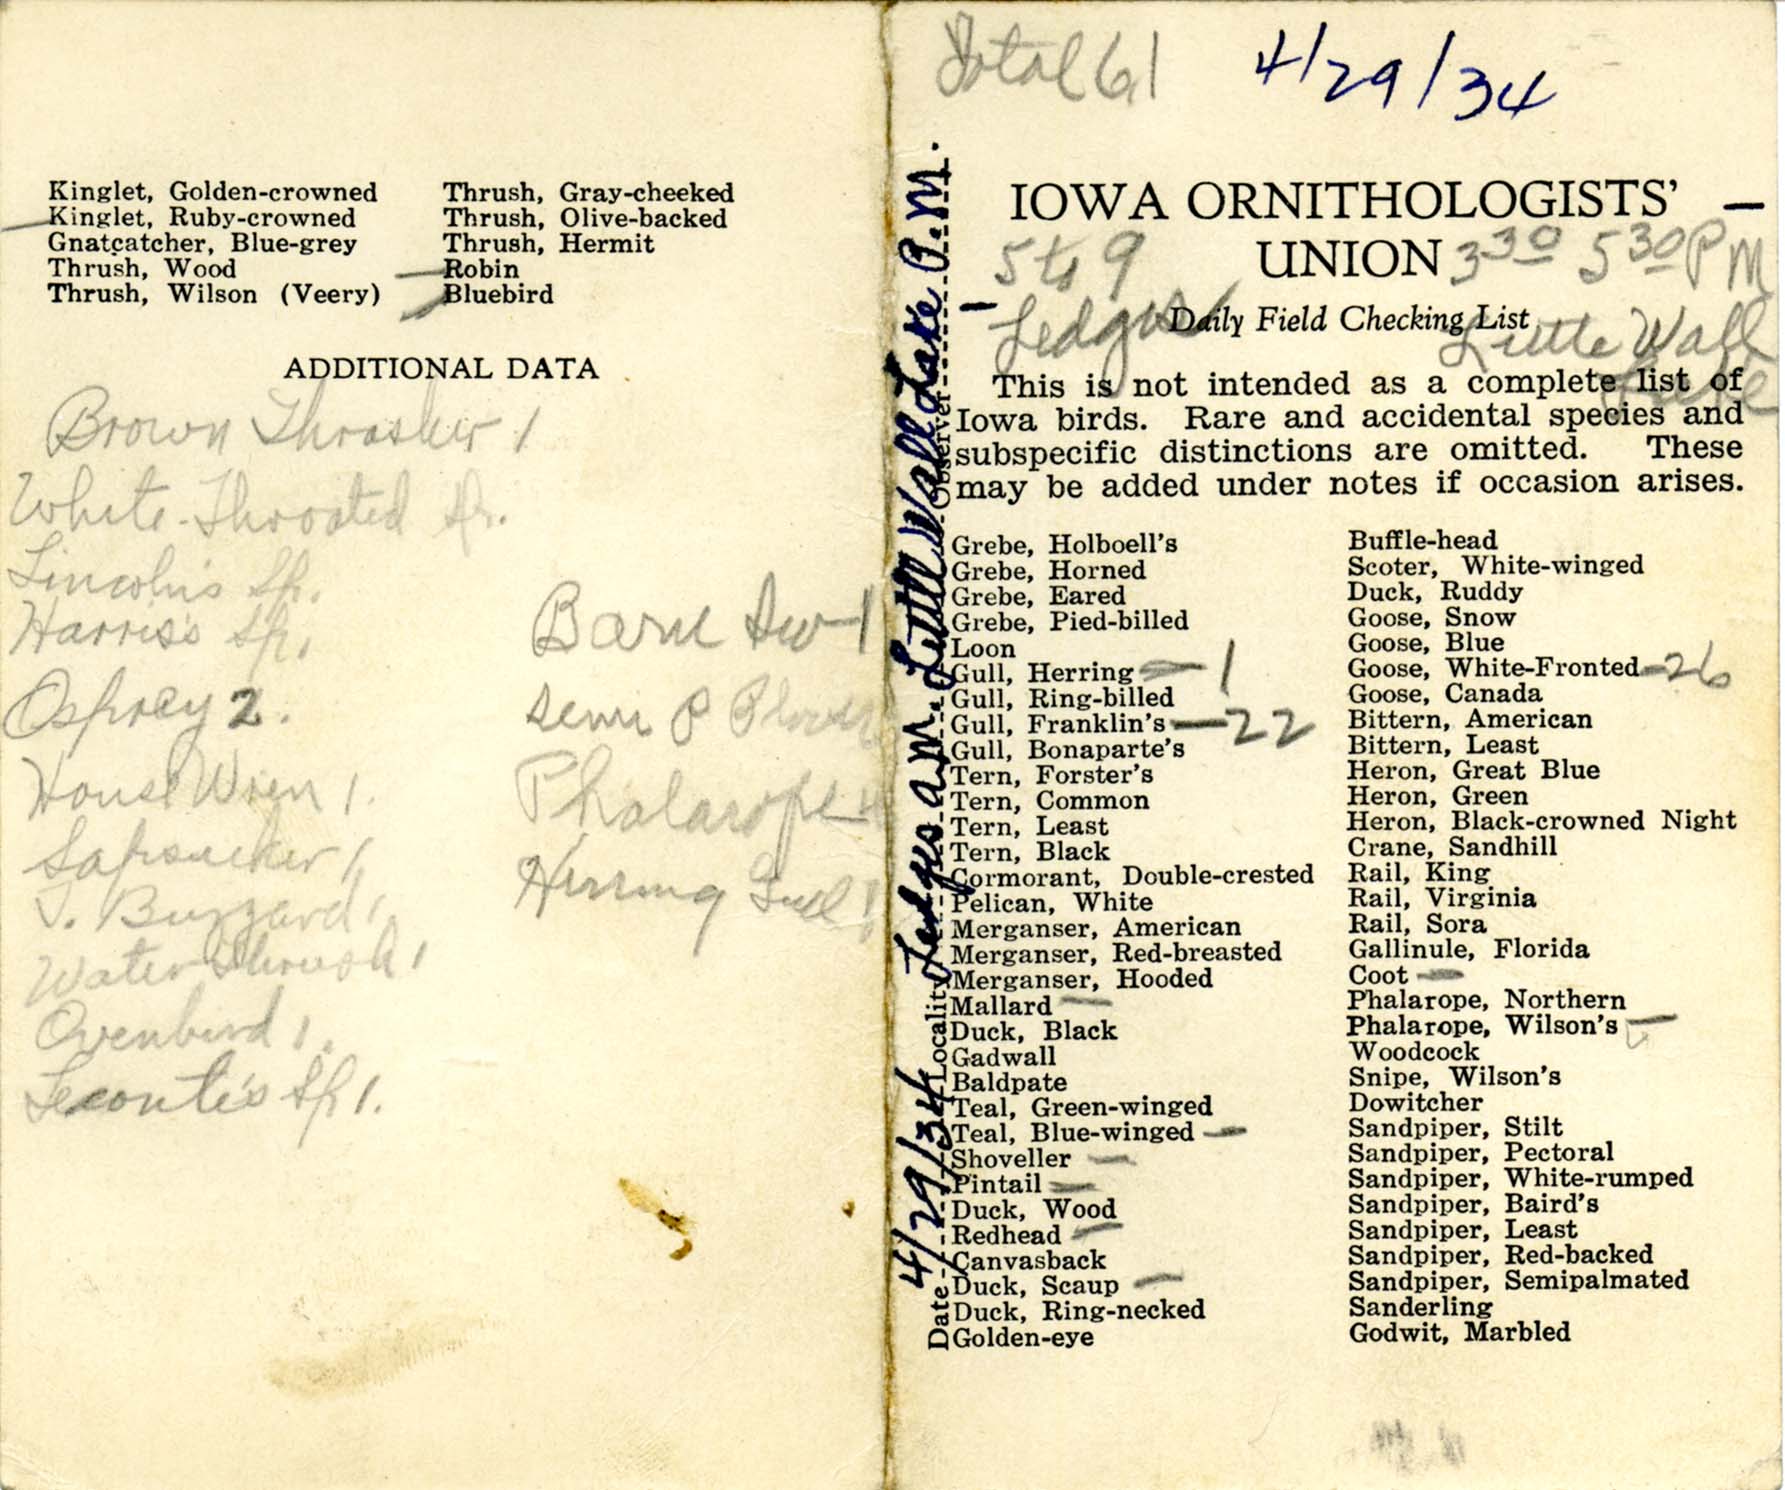 Daily field checking list, Walter Rosene, April 29, 1934